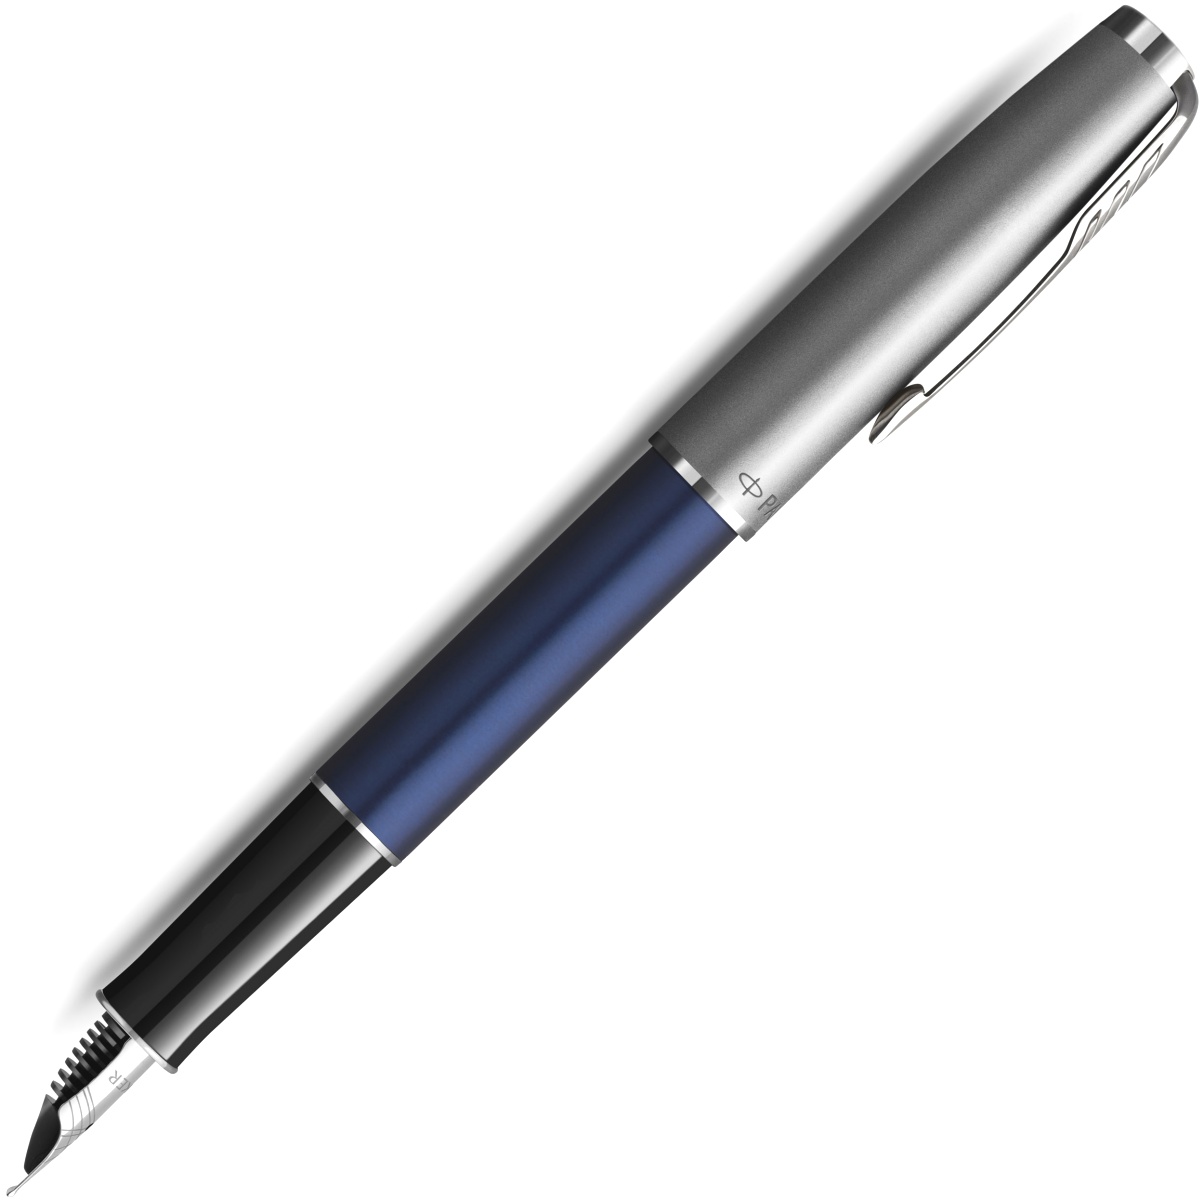  Ручка перьевая Parker Sonnet F546, Blue CT (Перо F), фото 2